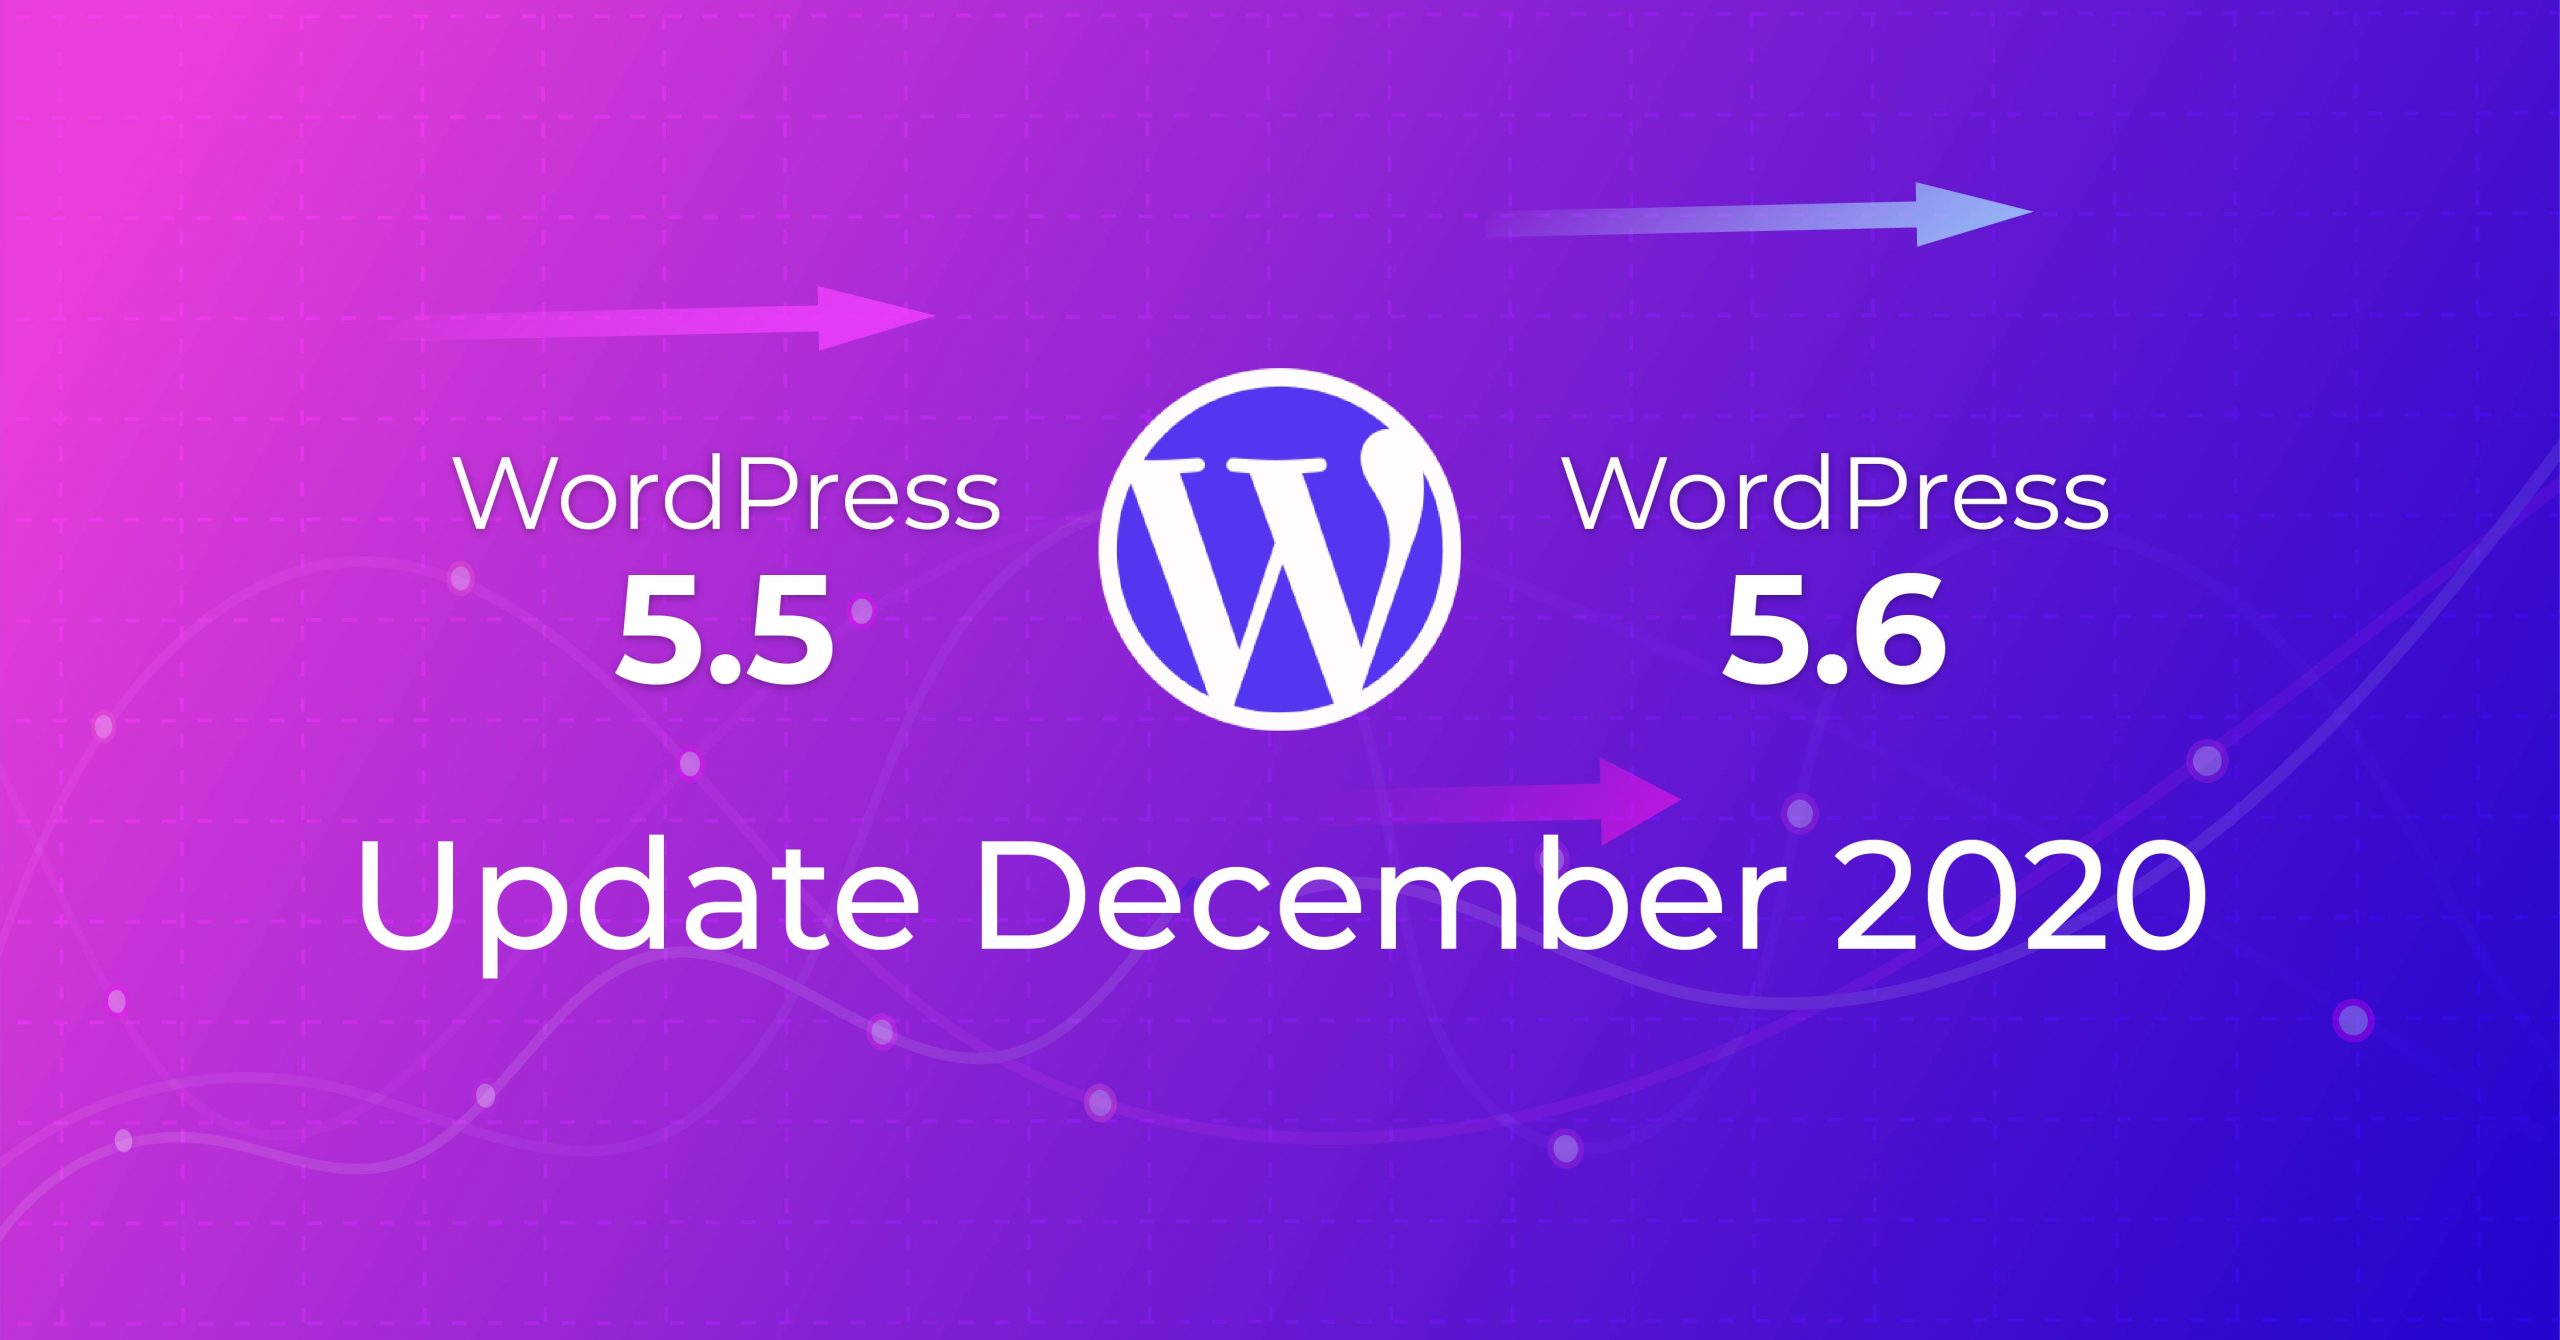 WordPress 5.6 Update December 2020